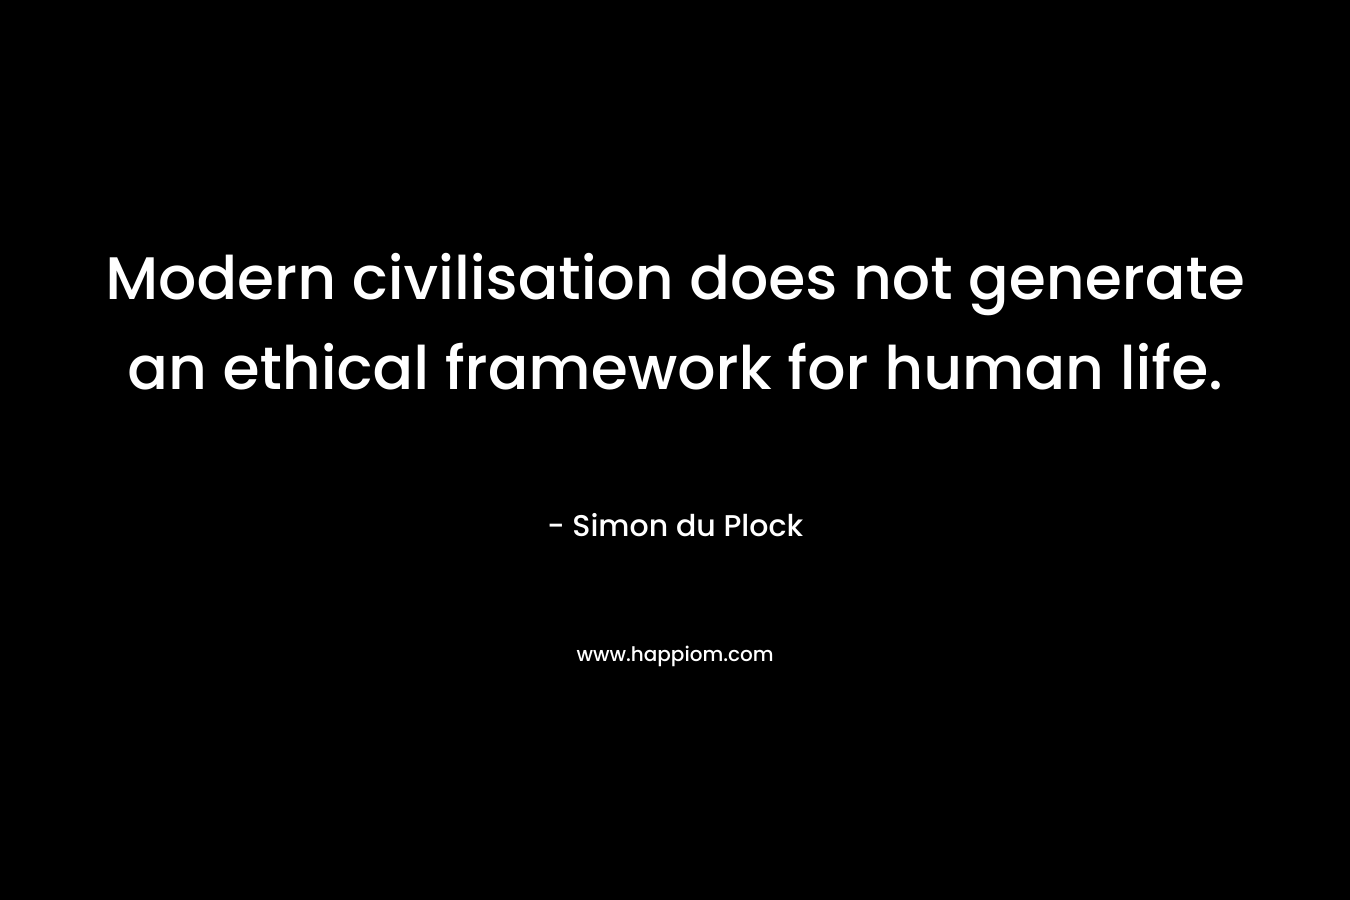 Modern civilisation does not generate an ethical framework for human life. – Simon du Plock